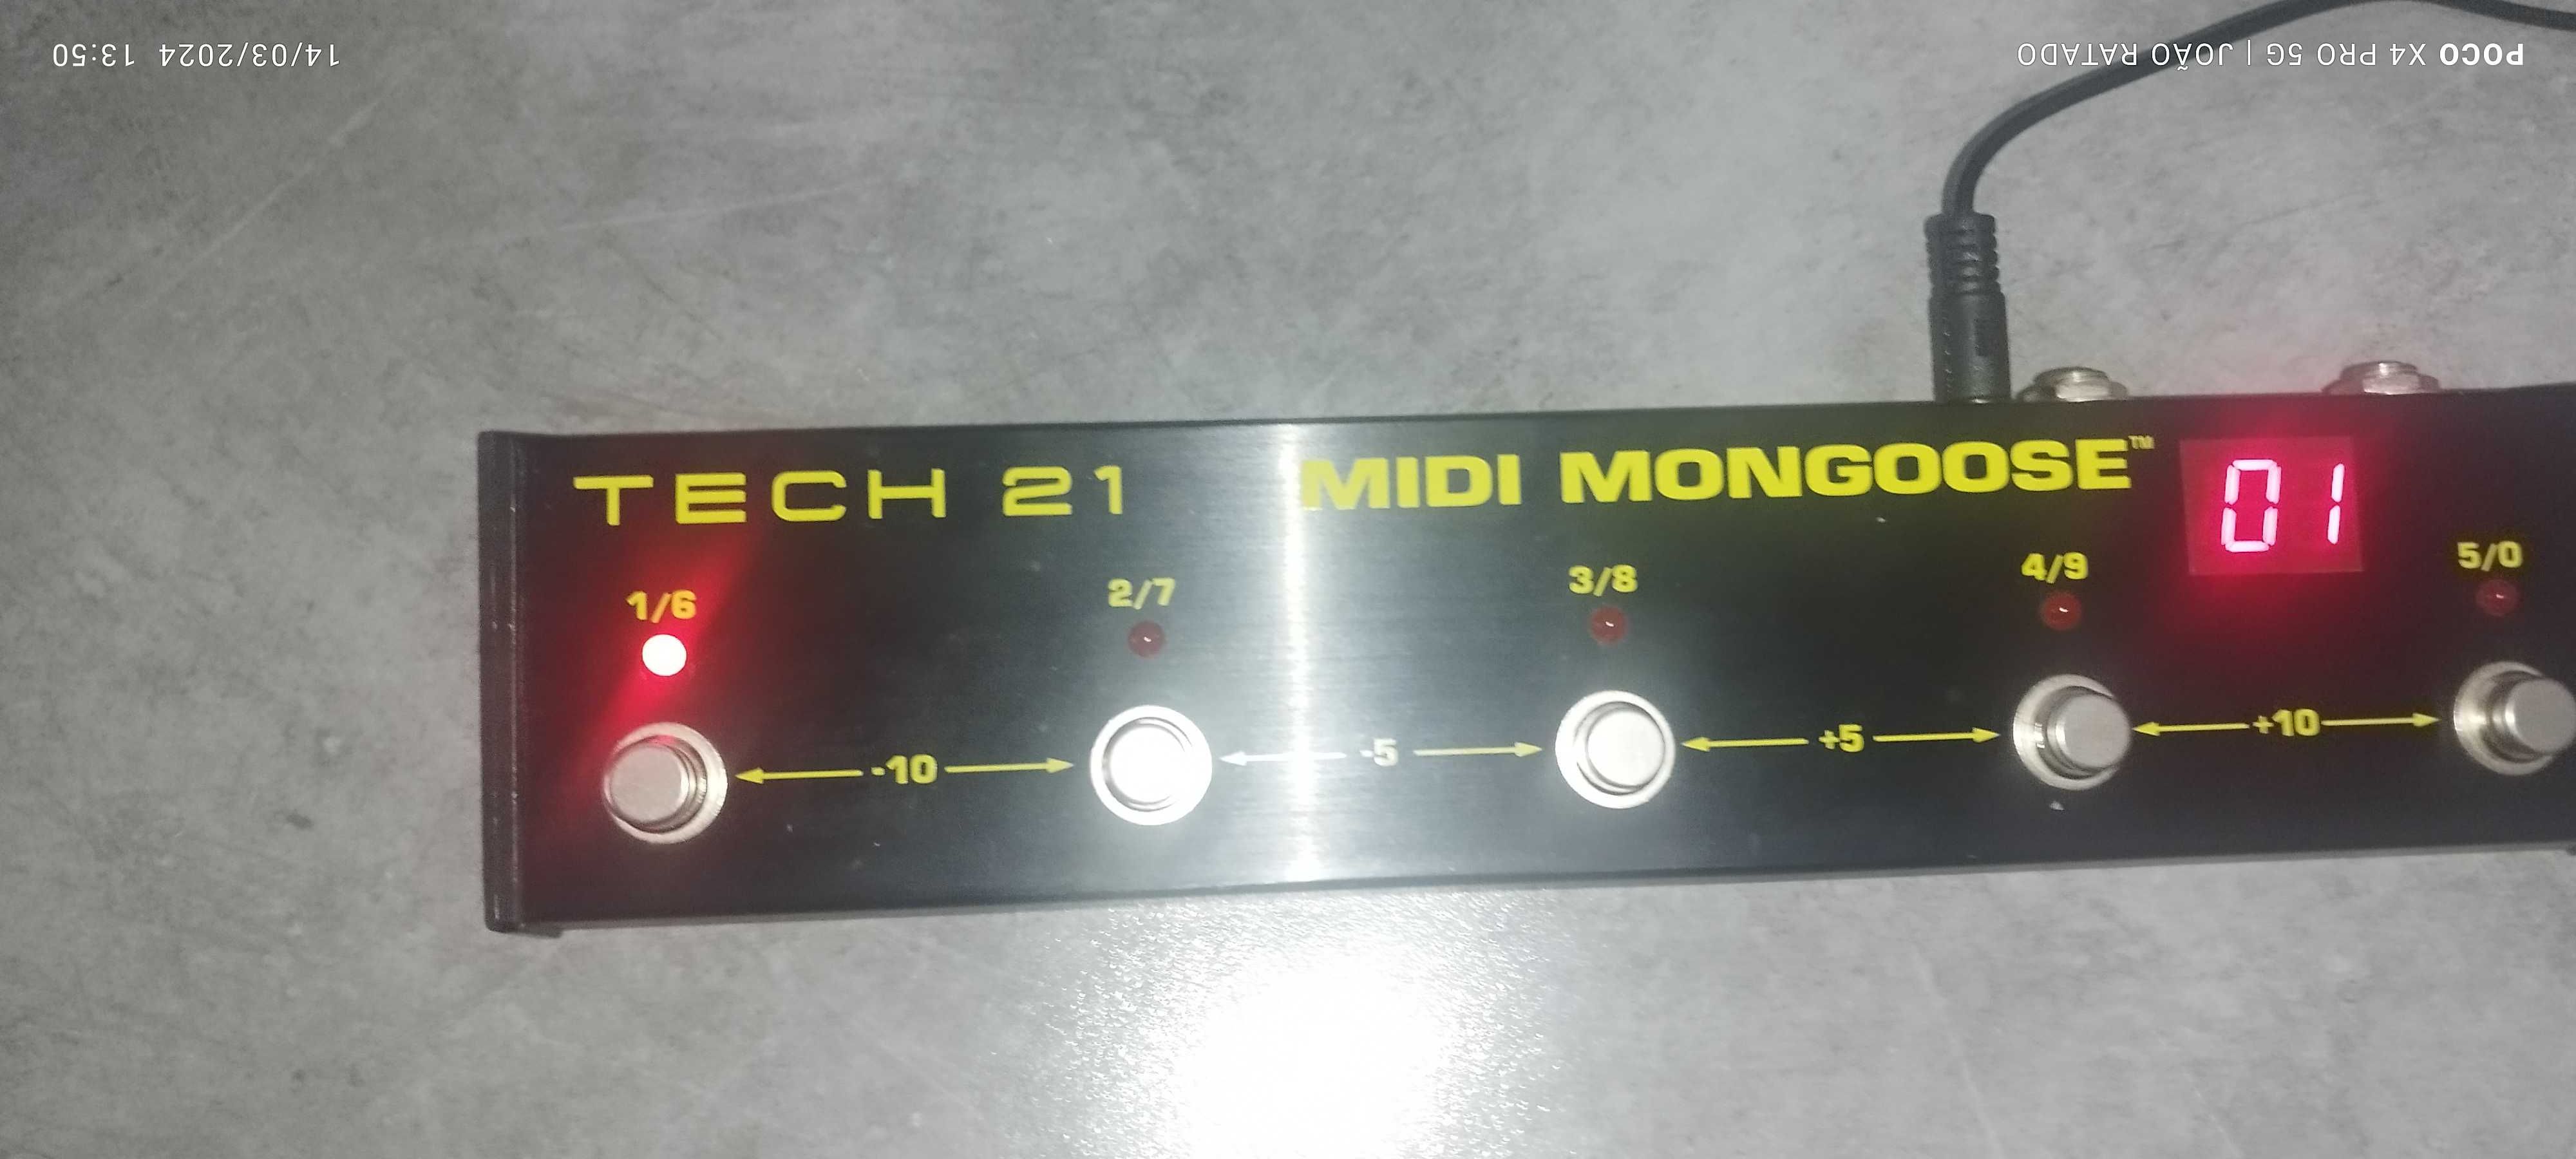 Tech 21 Midi Mongoose - Pedal Midi